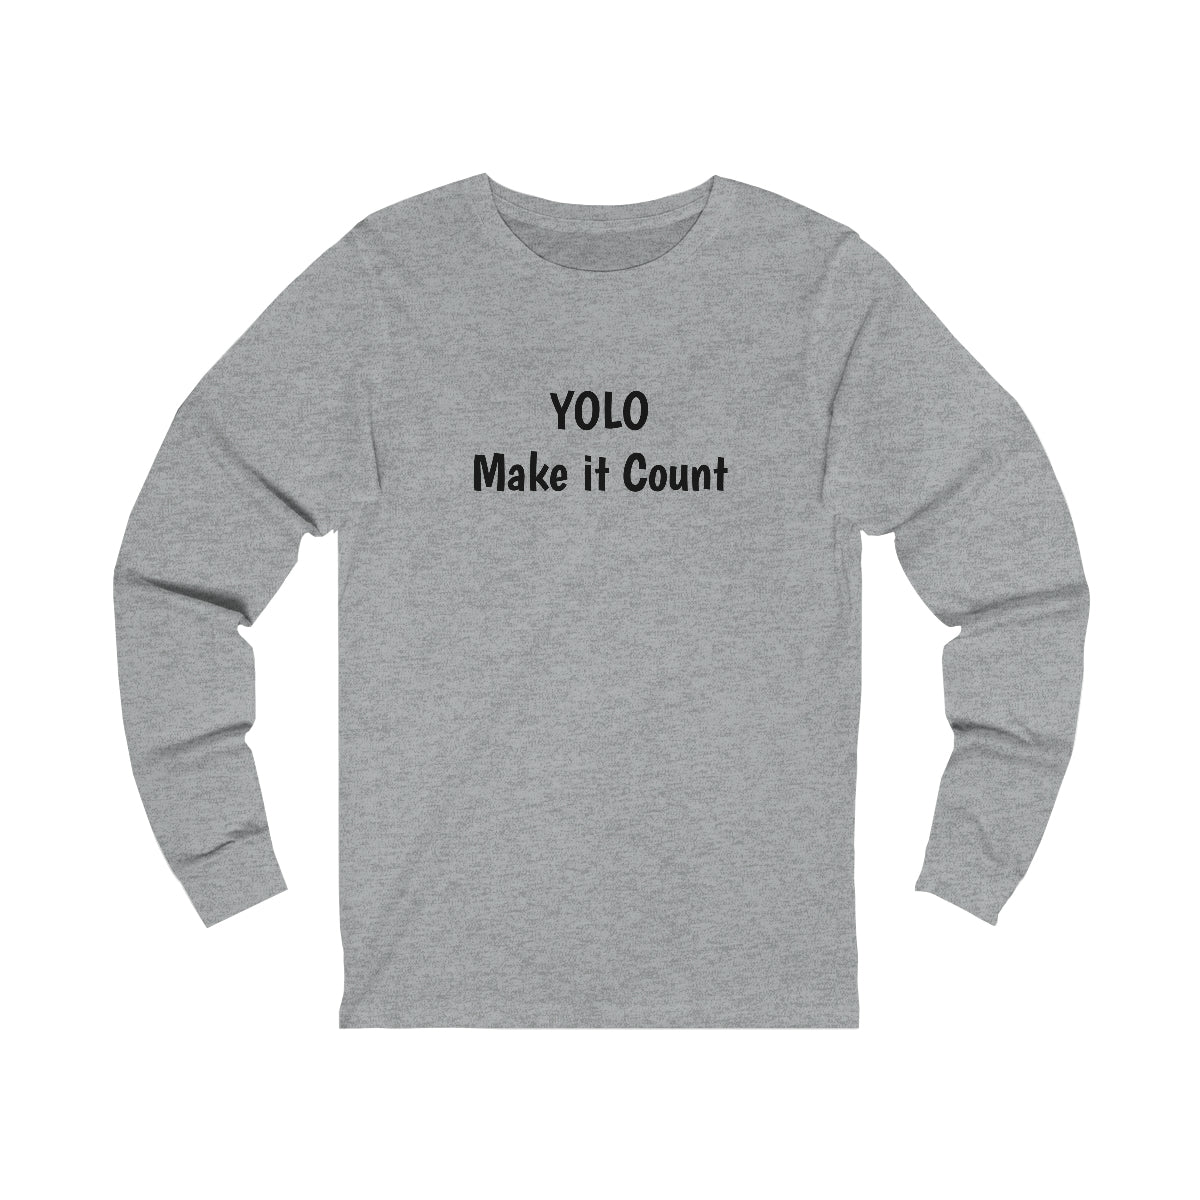 YOLO Make it Count - Unisex Jersey Long Sleeve Tee